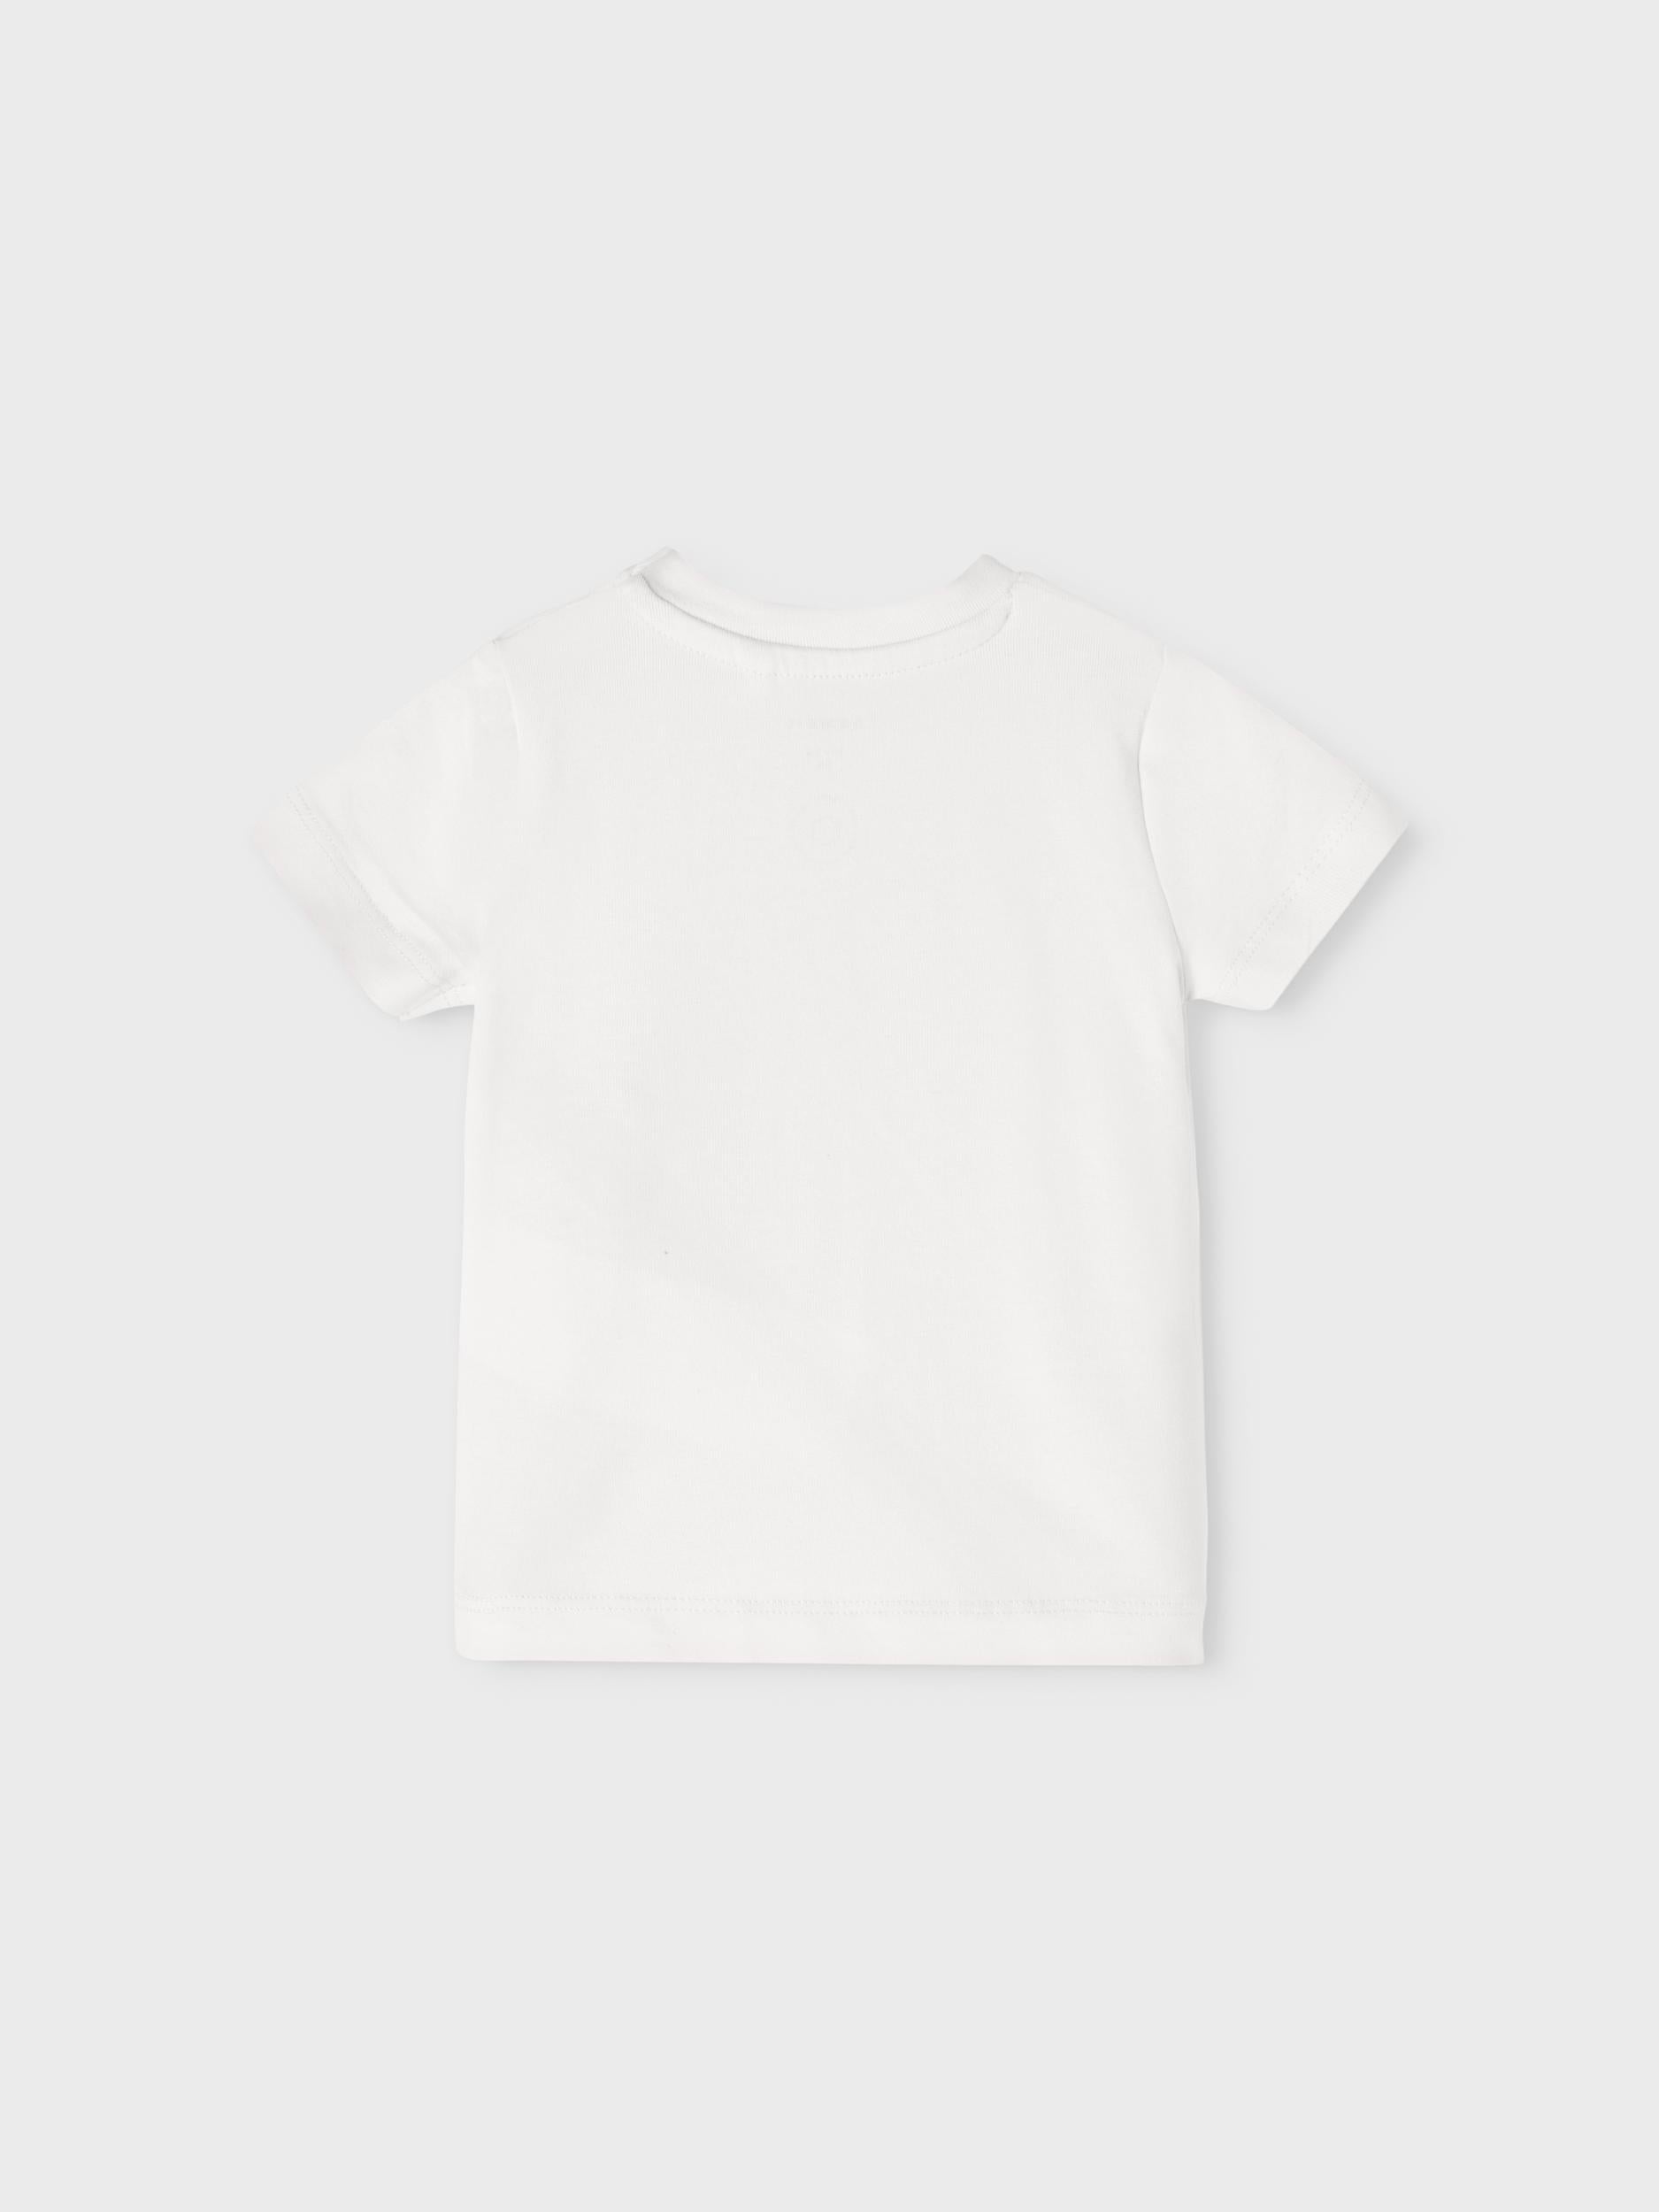 Halfred Short Sleeve Top White Alyssum - Rear View